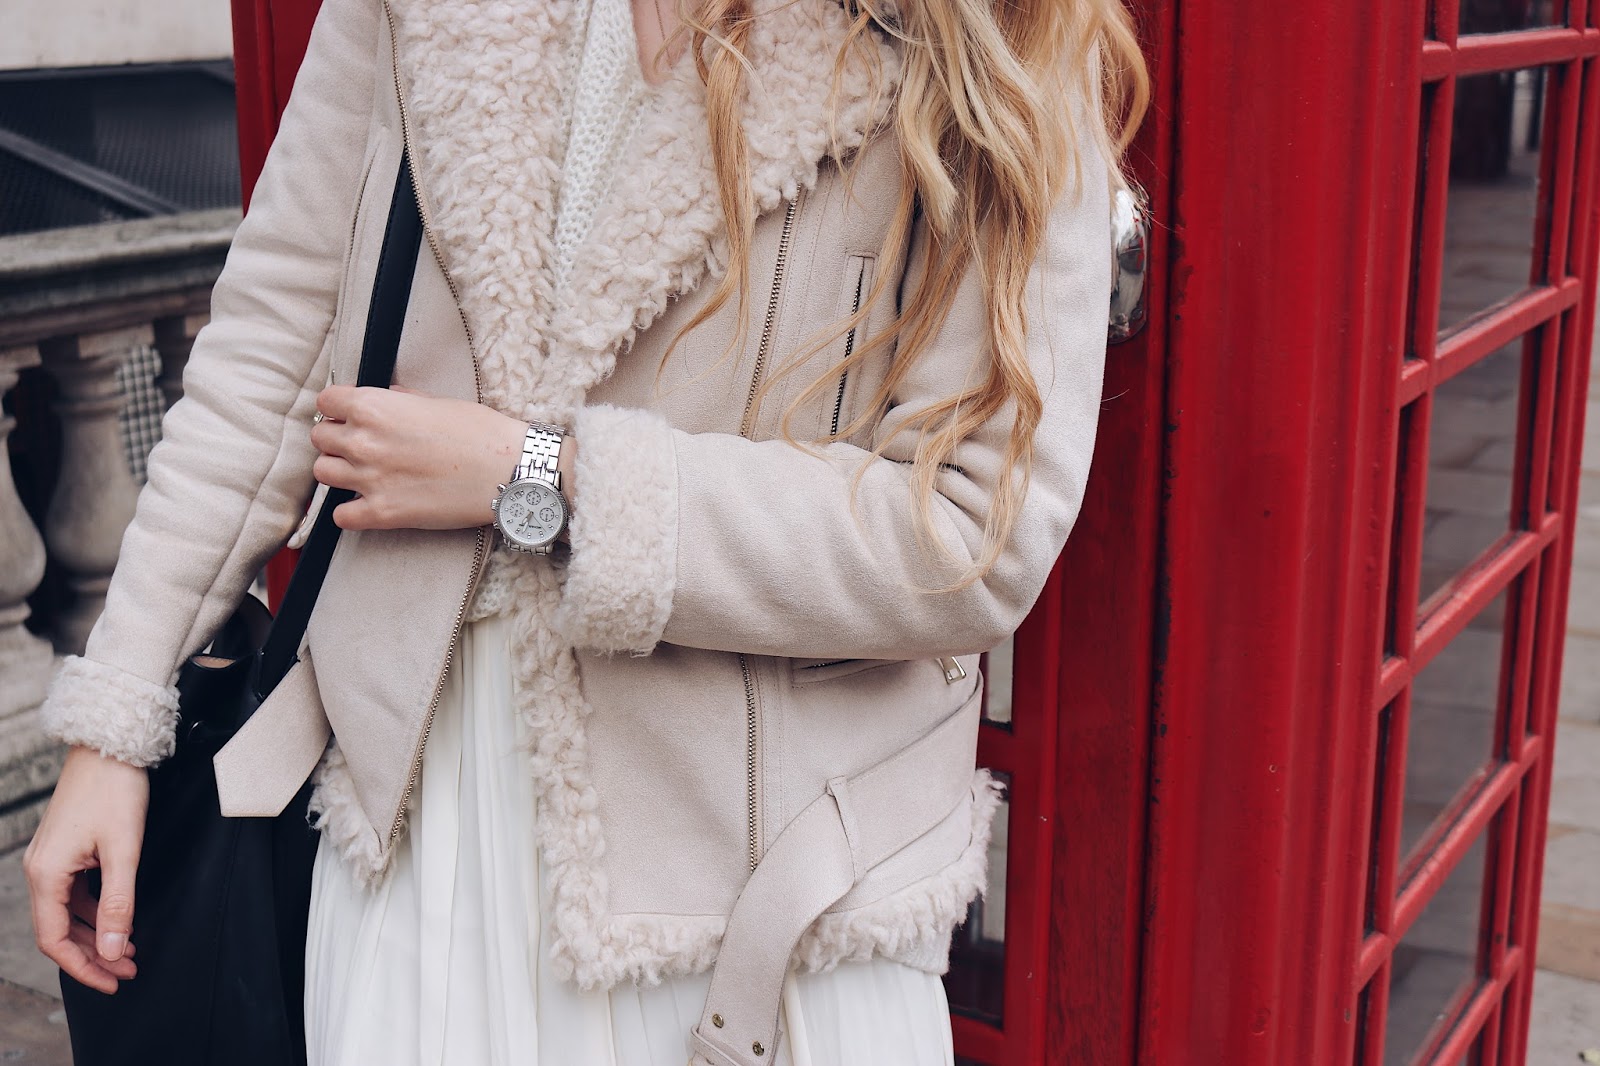 Fashionblog Stuttgart: Outfit All White Gambettes Box Strumpfhose an Telefonzelle London 